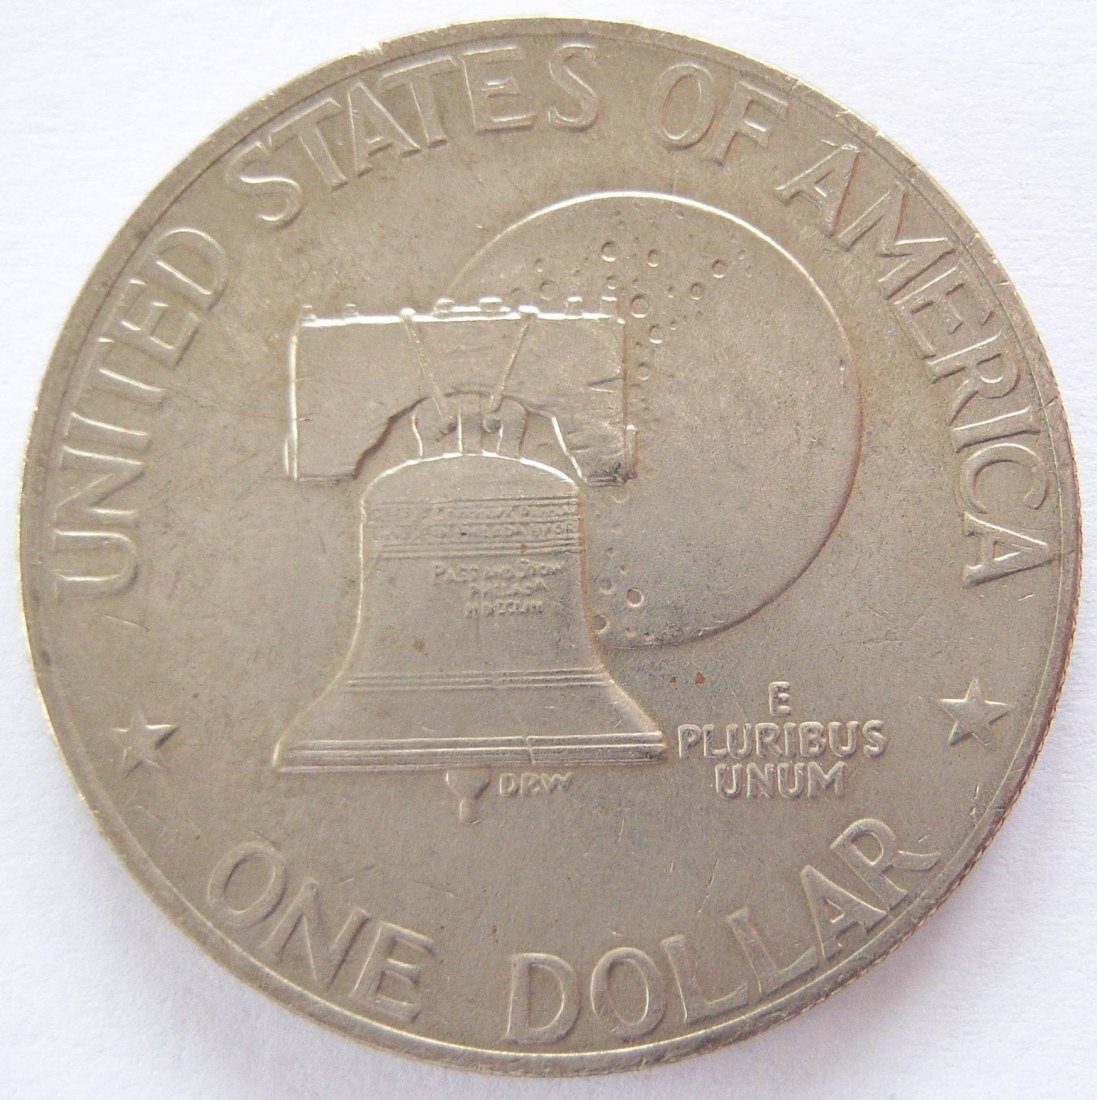  USA Eisenhower 1 One Dollar 1976   